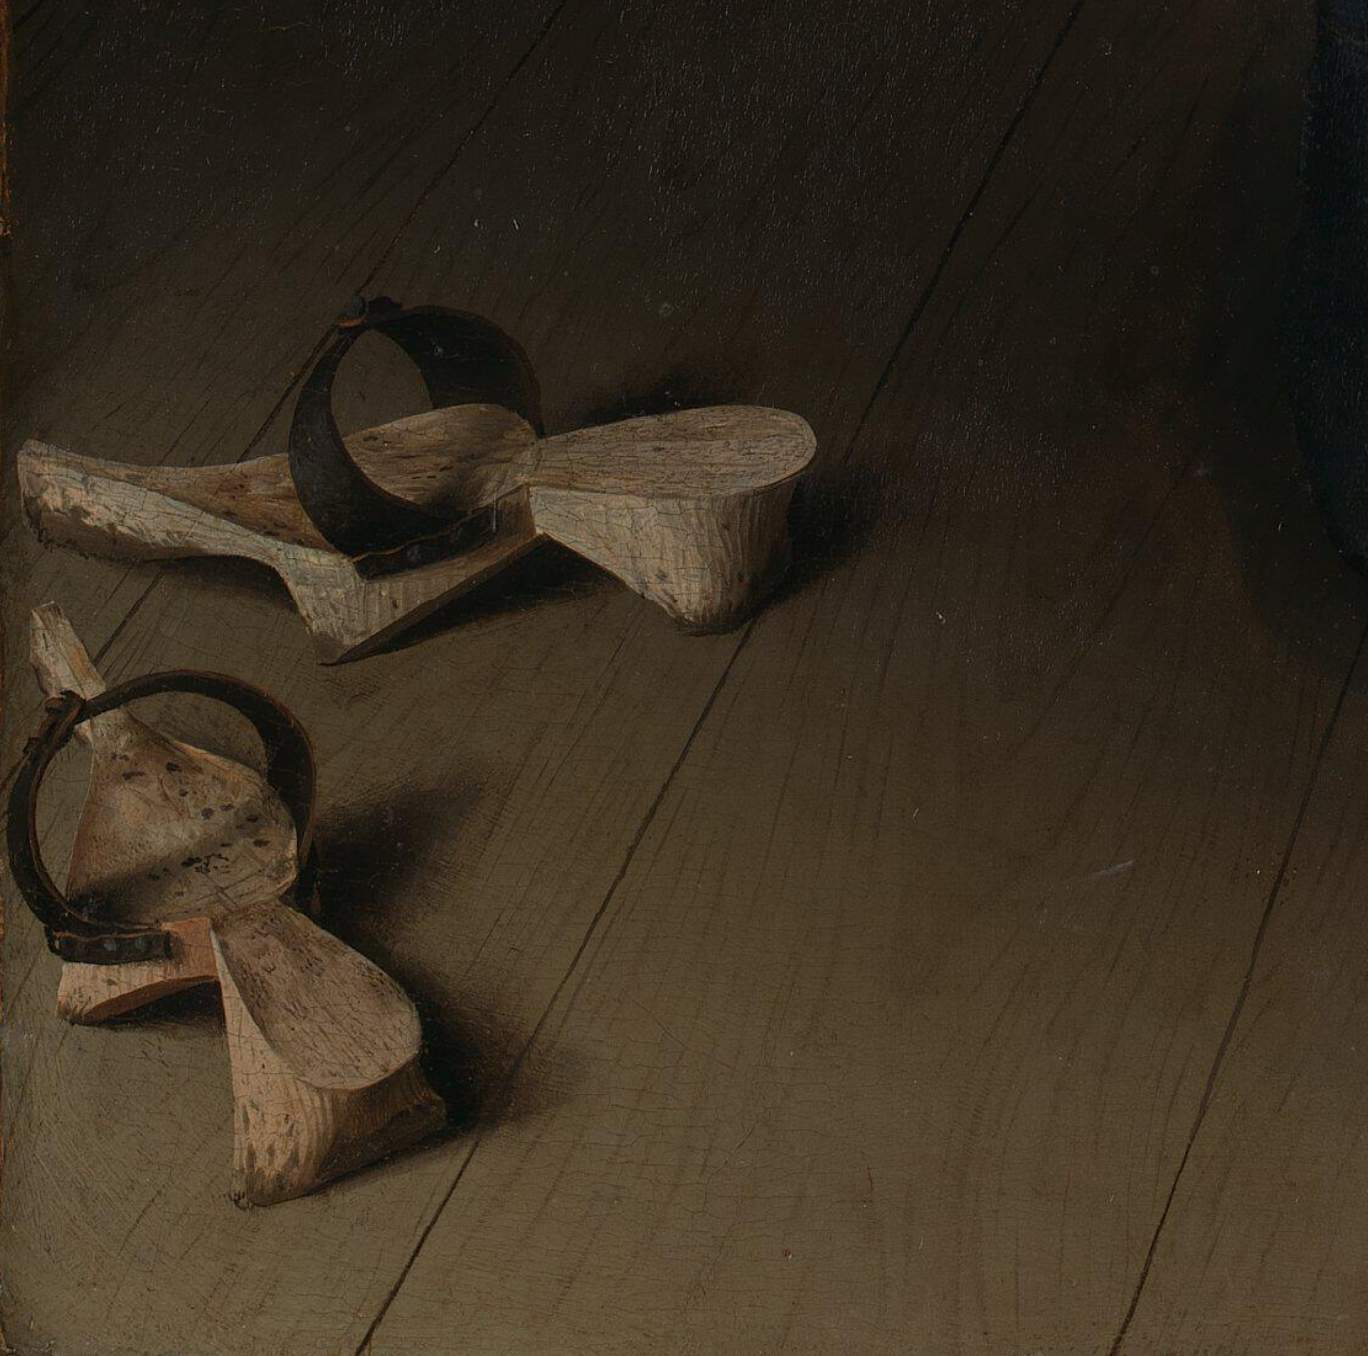 Shoes from Jan van Eyck's Arnolfini Portrait (1434)